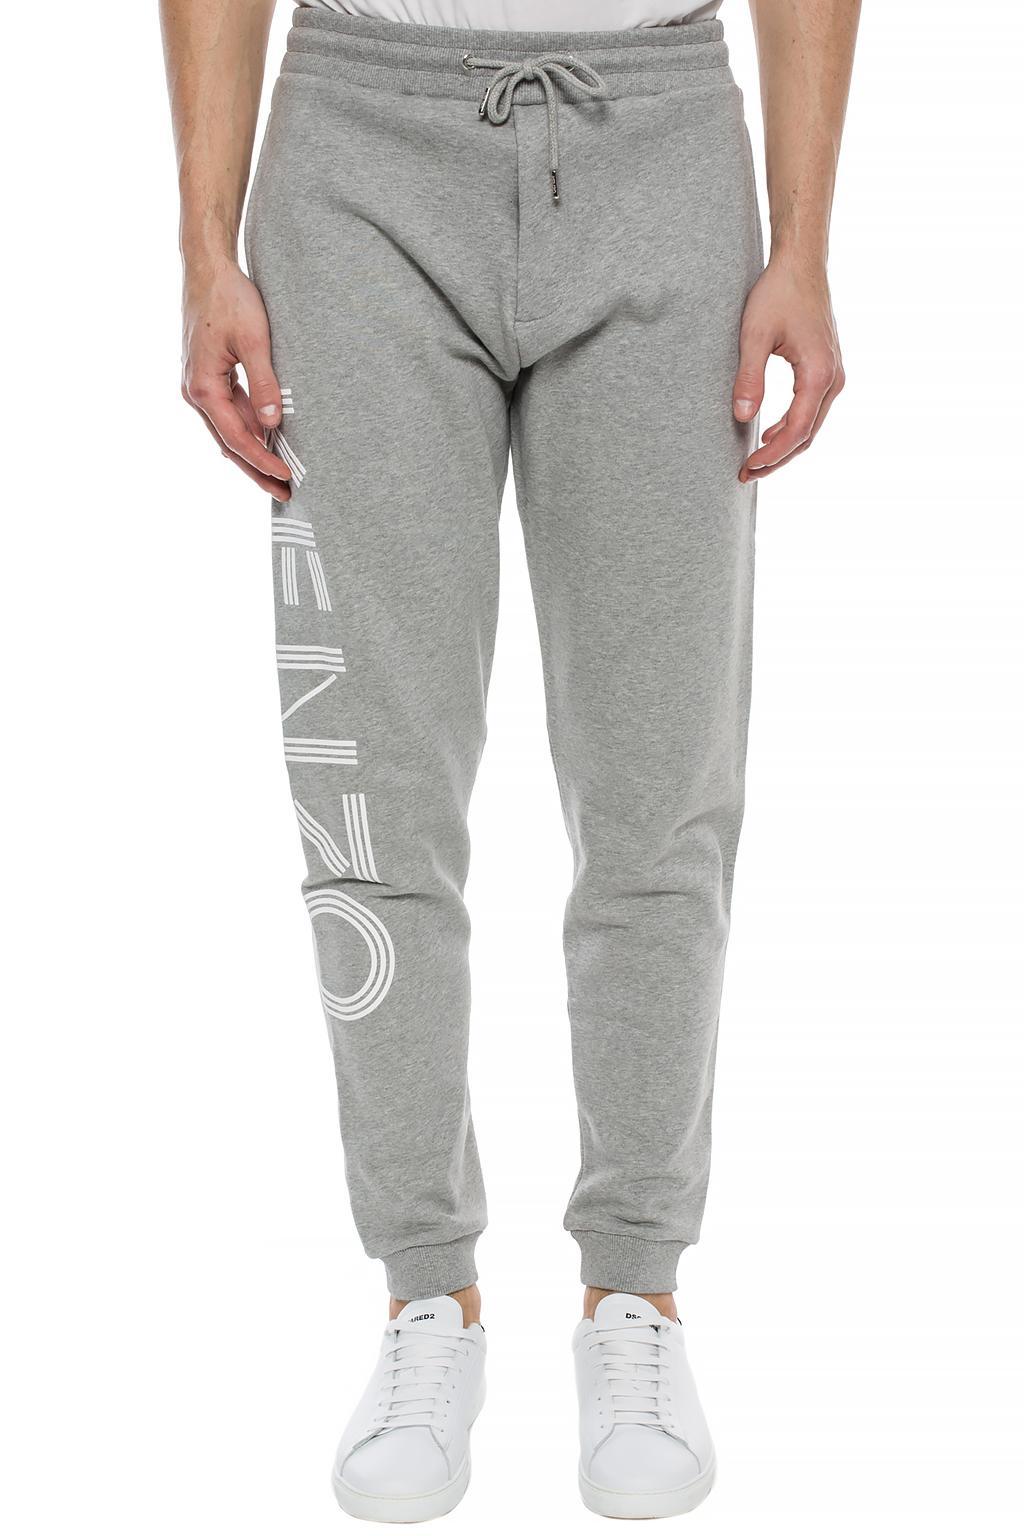 KENZO Cotton Logo Sweatpants in Grey (Gray) for Men - Lyst